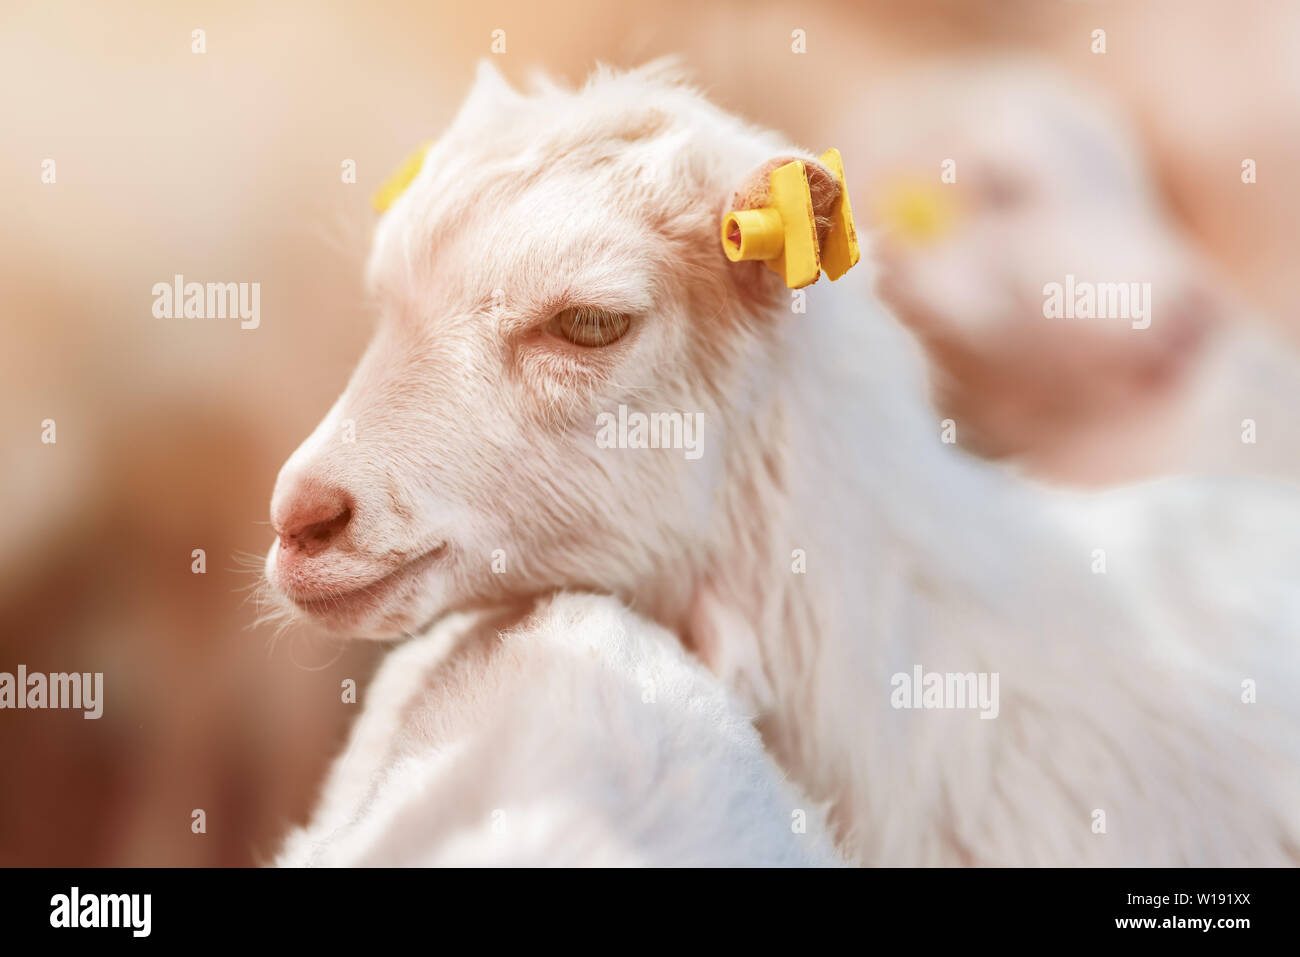 Cute baby goat kid in pen on livestock farm, adorable domestic animal portrait Stock Photo